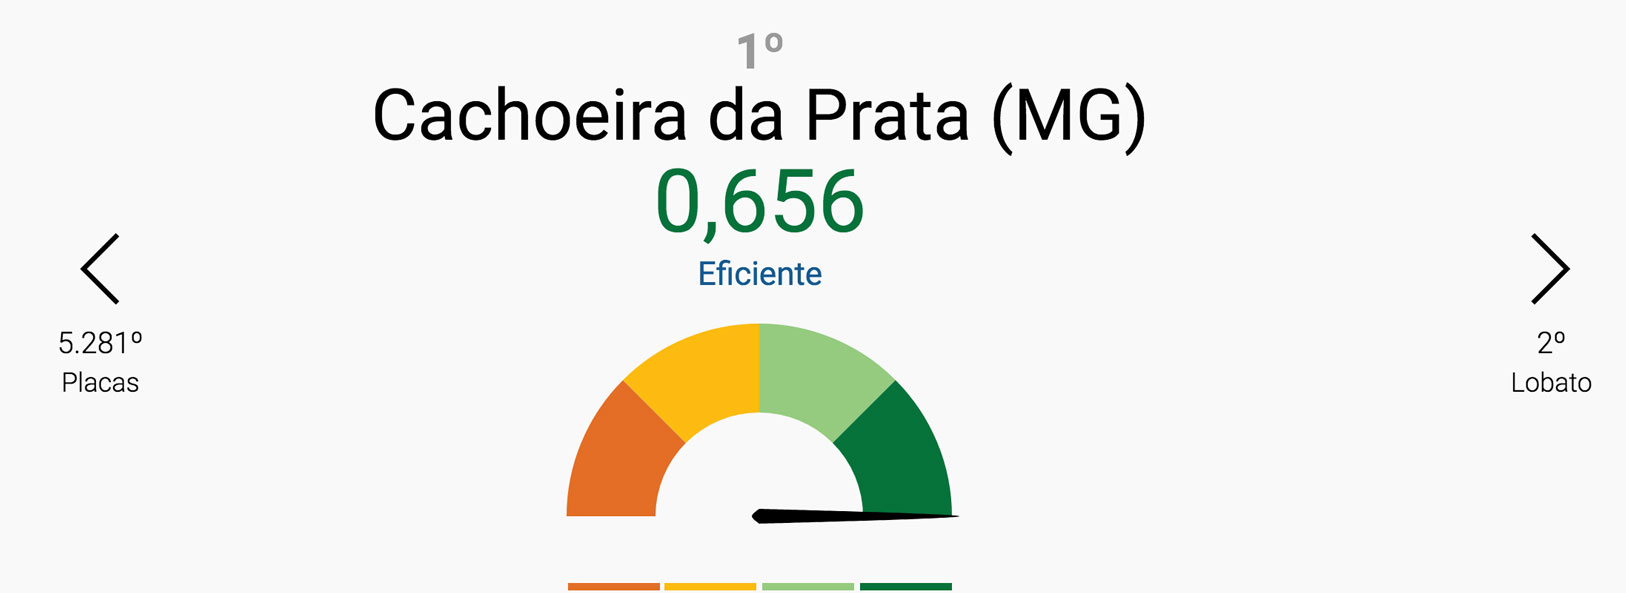 Image of project “Ranking of efficiency of Brazilian municipalities”